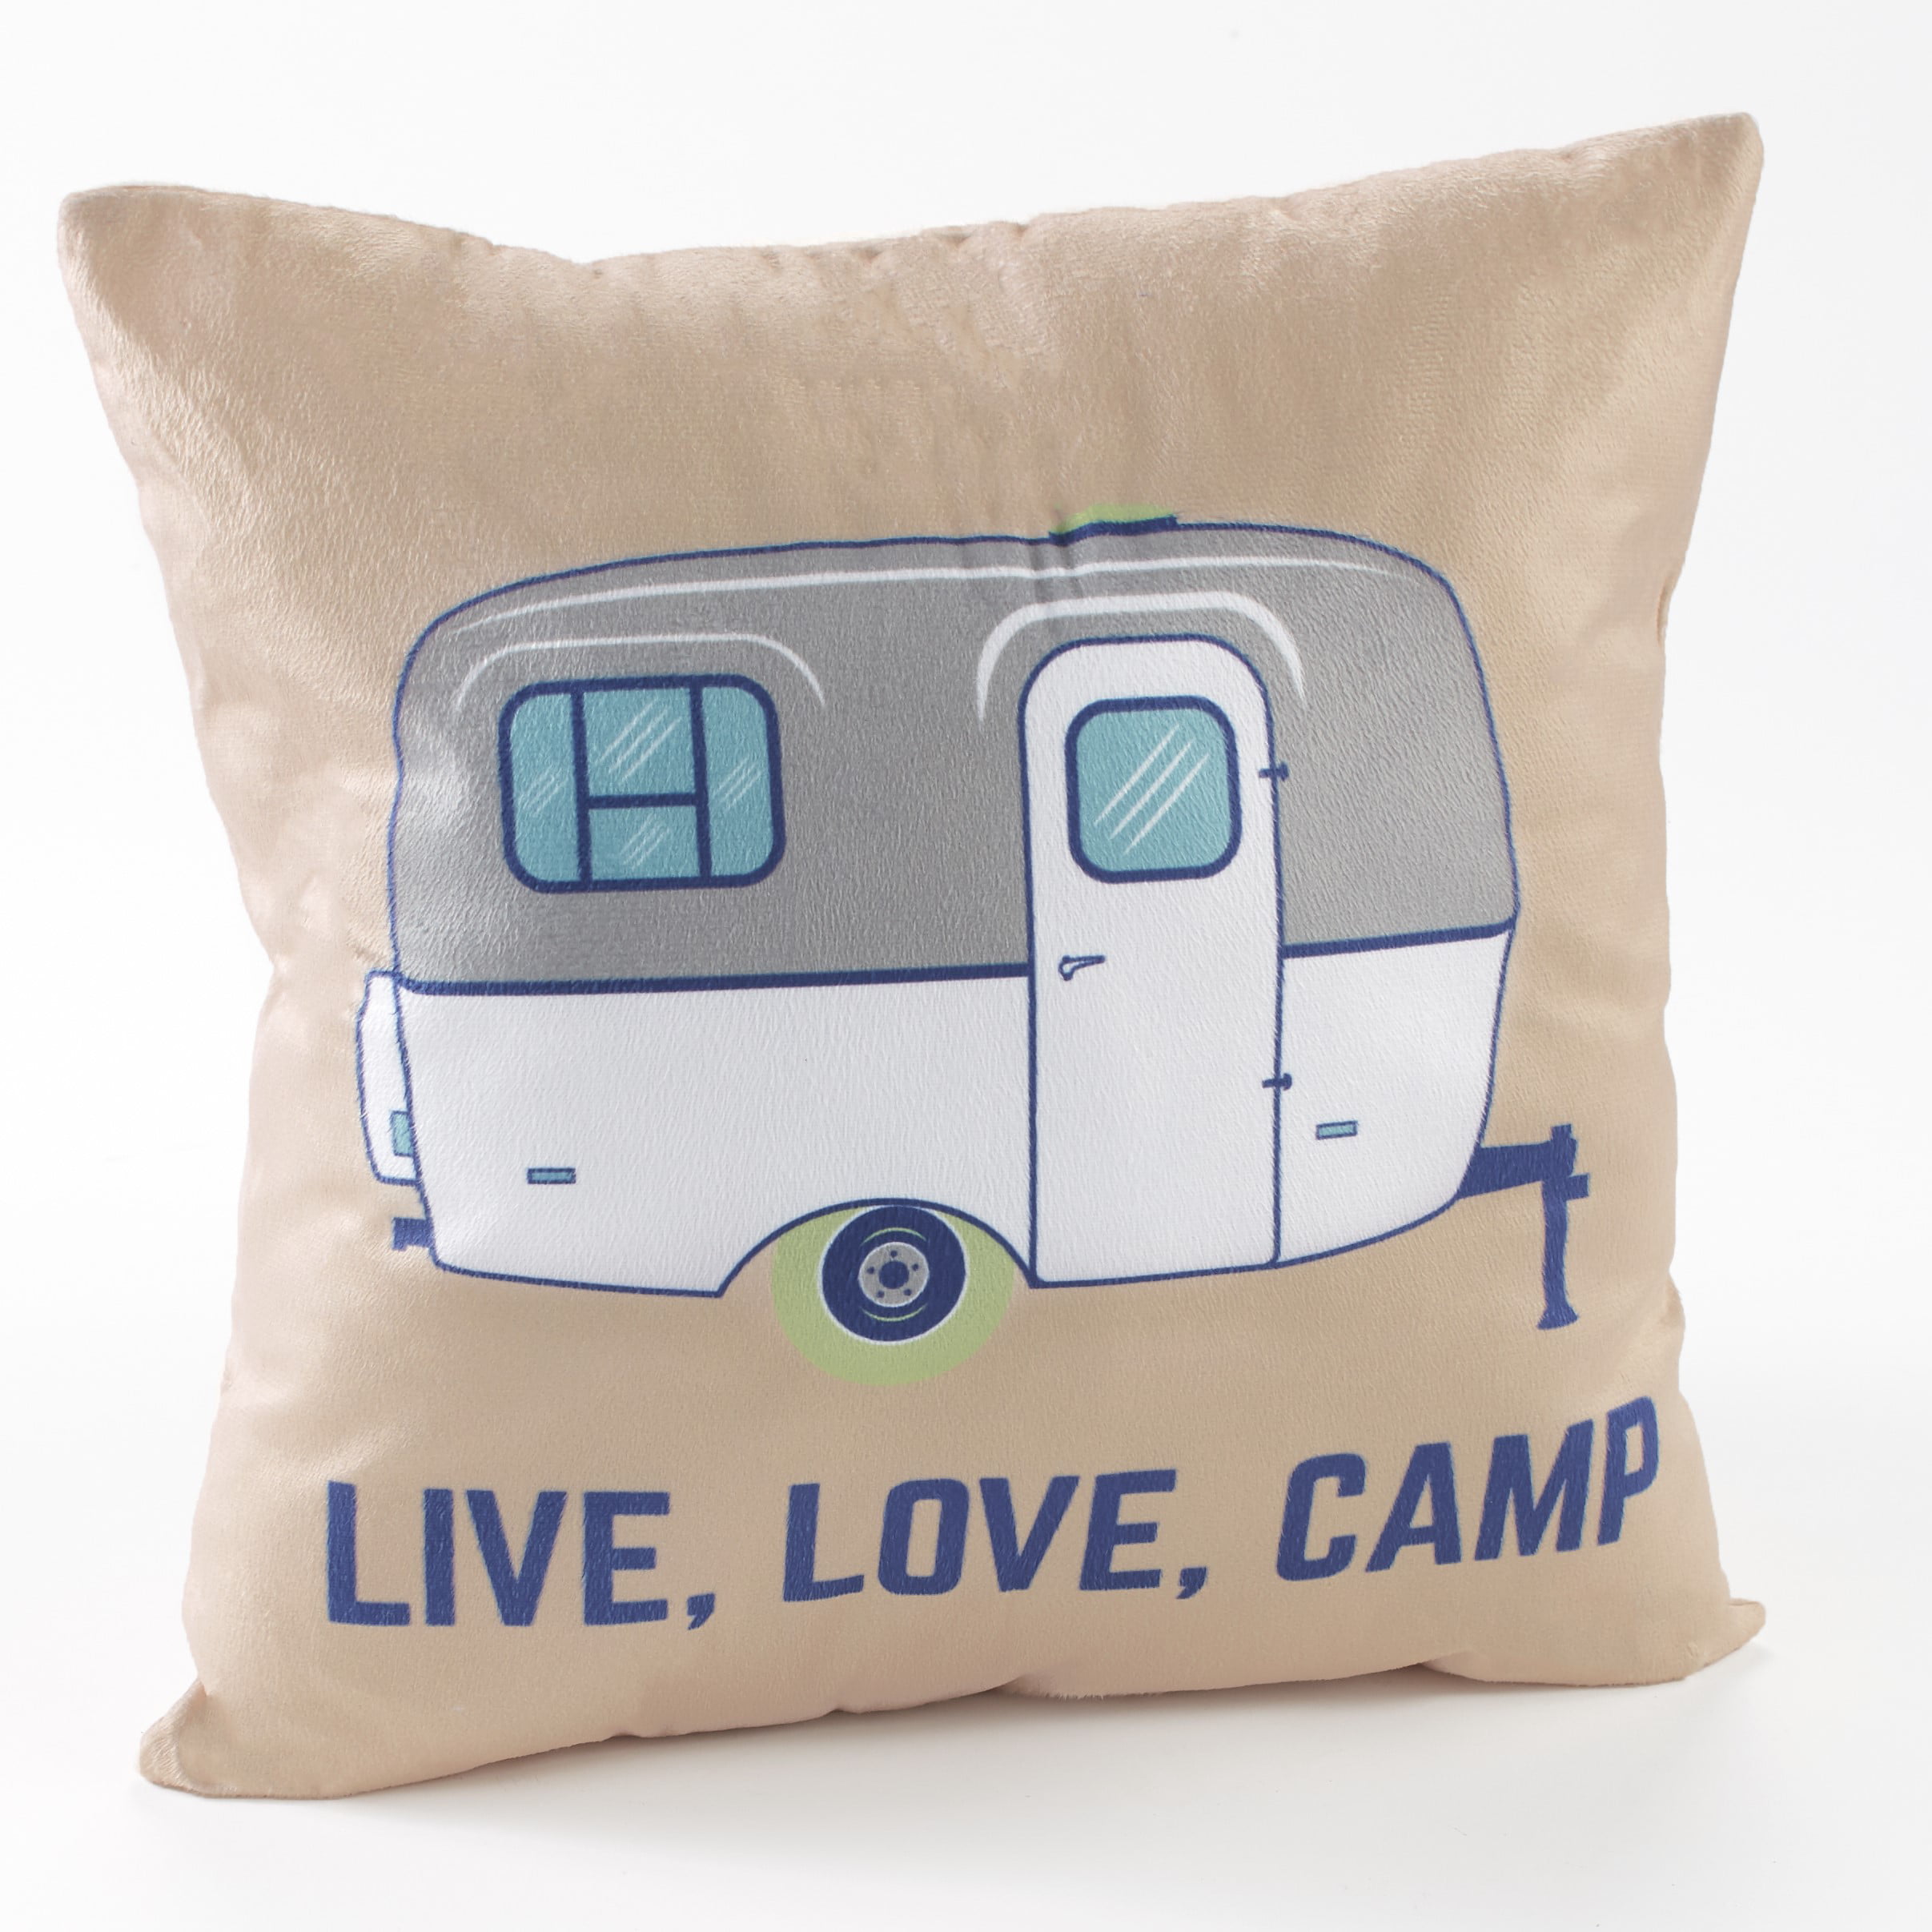 45cm*45cm Cute Camper Big RV motorhome design linen/cotton throw pillow covers 